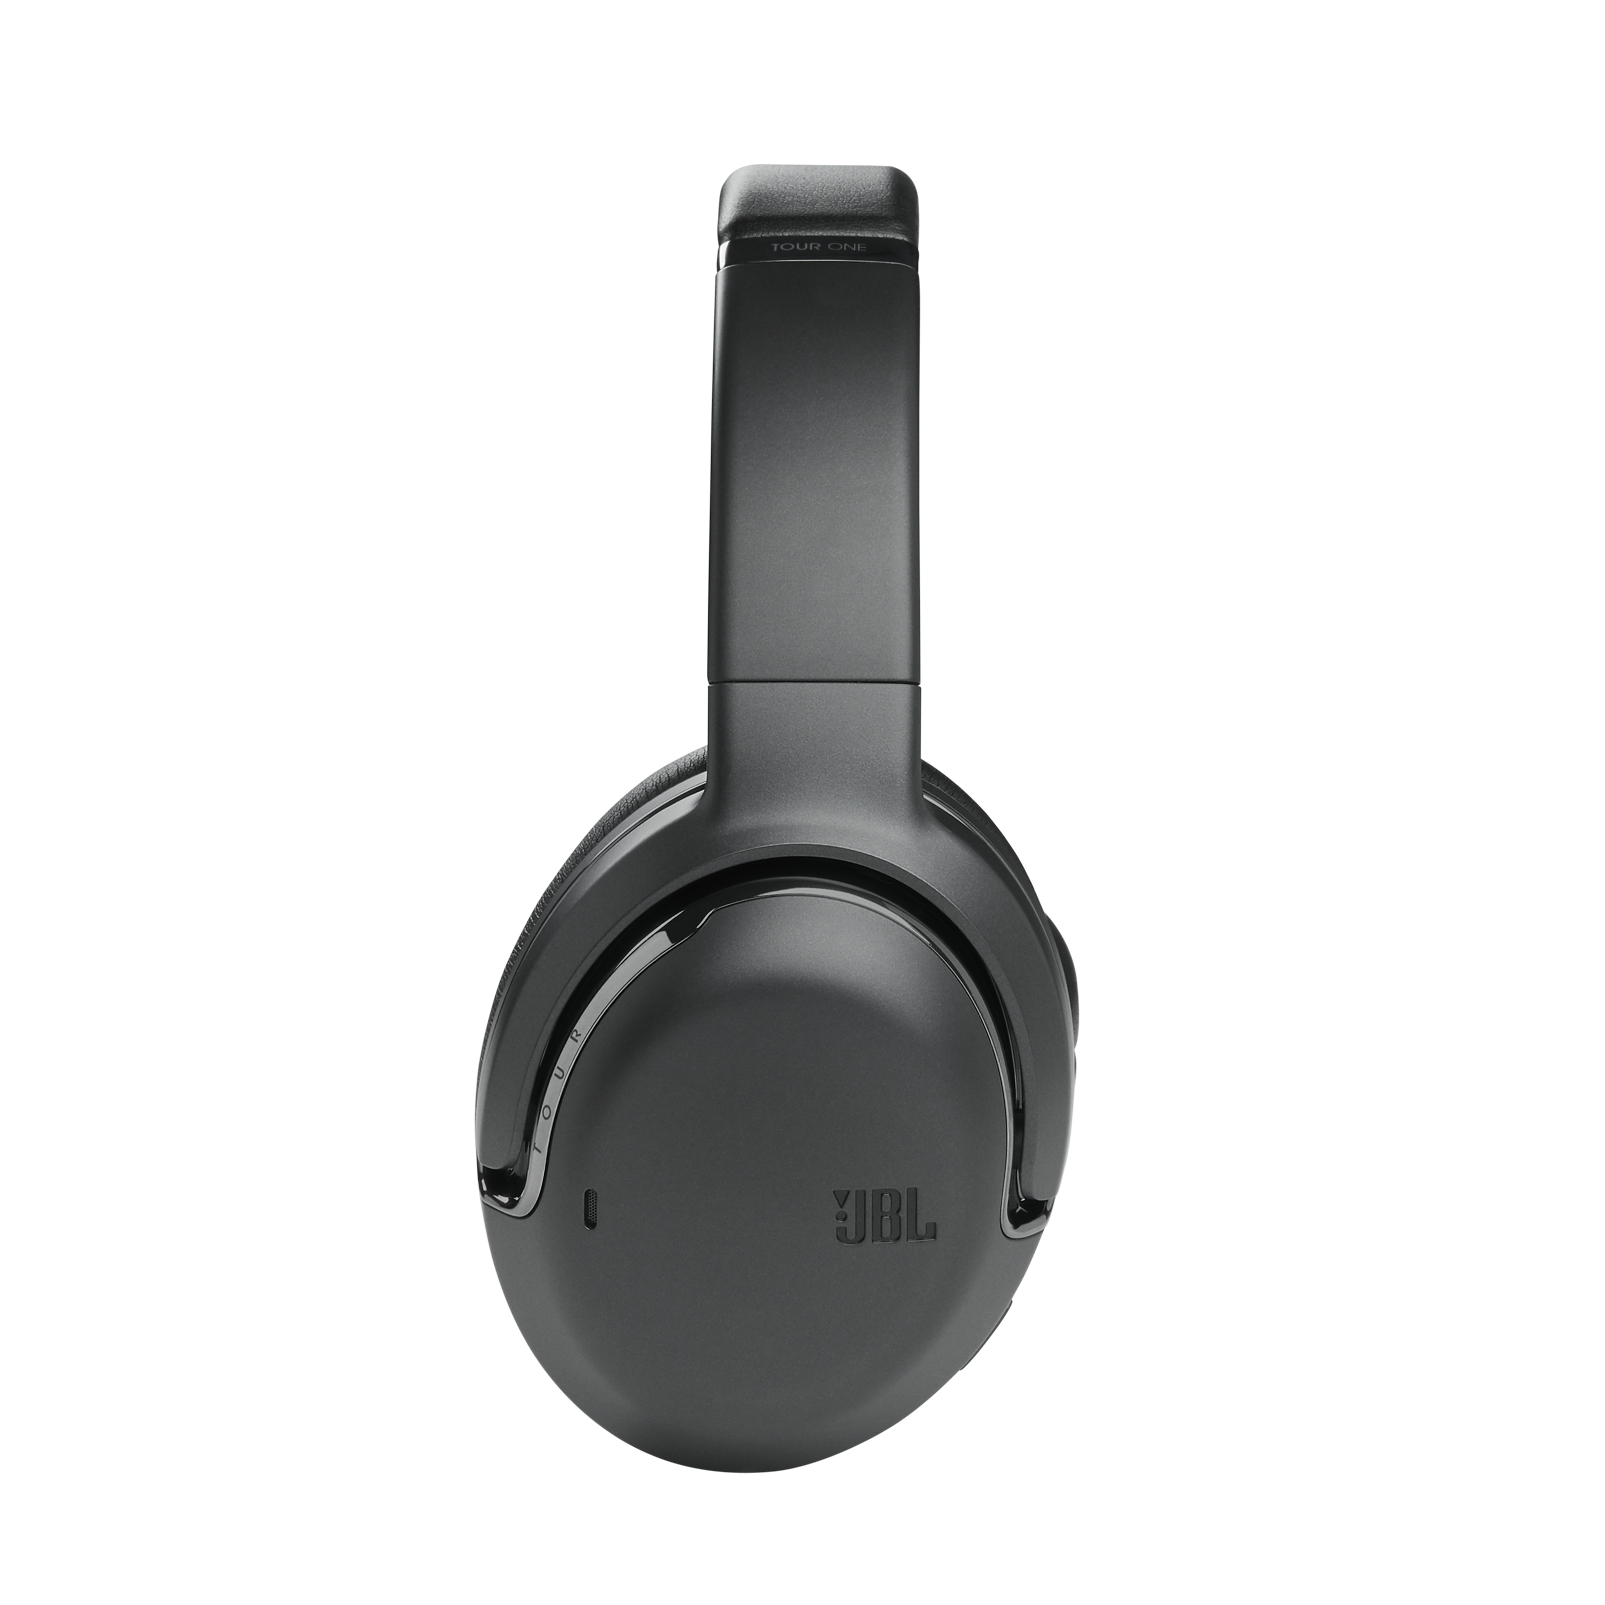 JBL Tour One - Black - Wireless over-ear noise cancelling headphones - Left